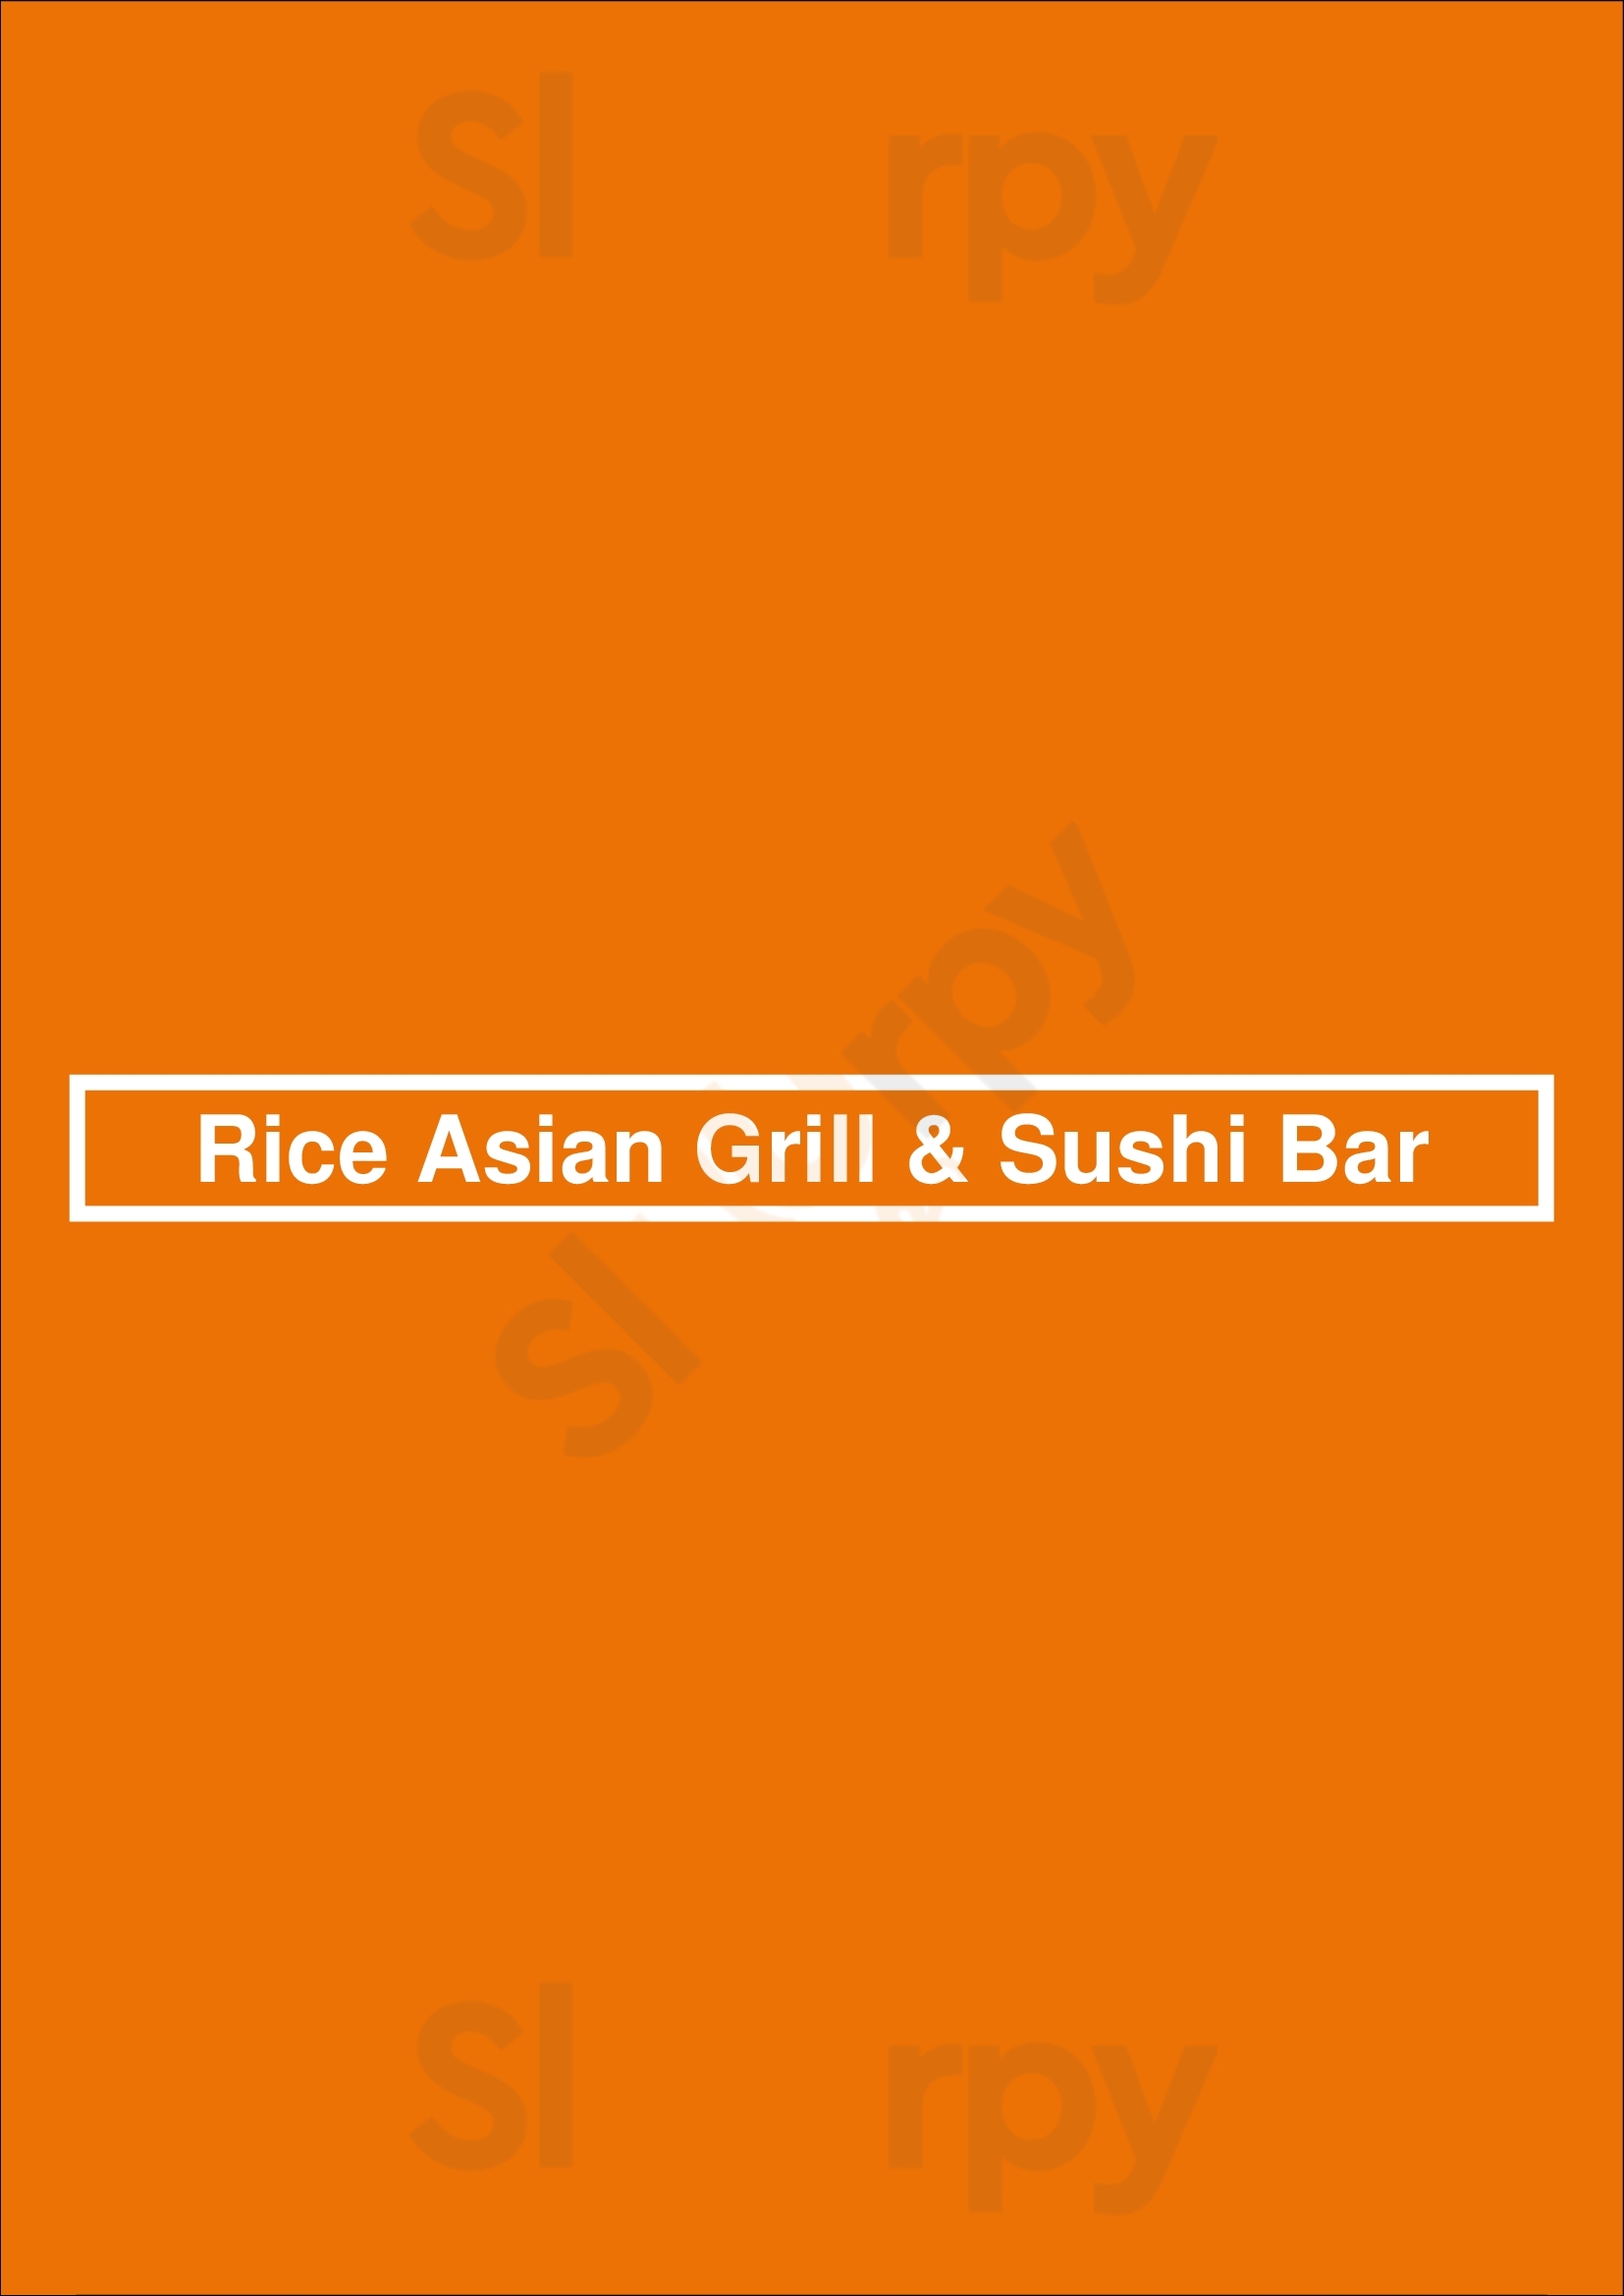 Rice Asian Grill & Sushi Bar Mobile Menu - 1